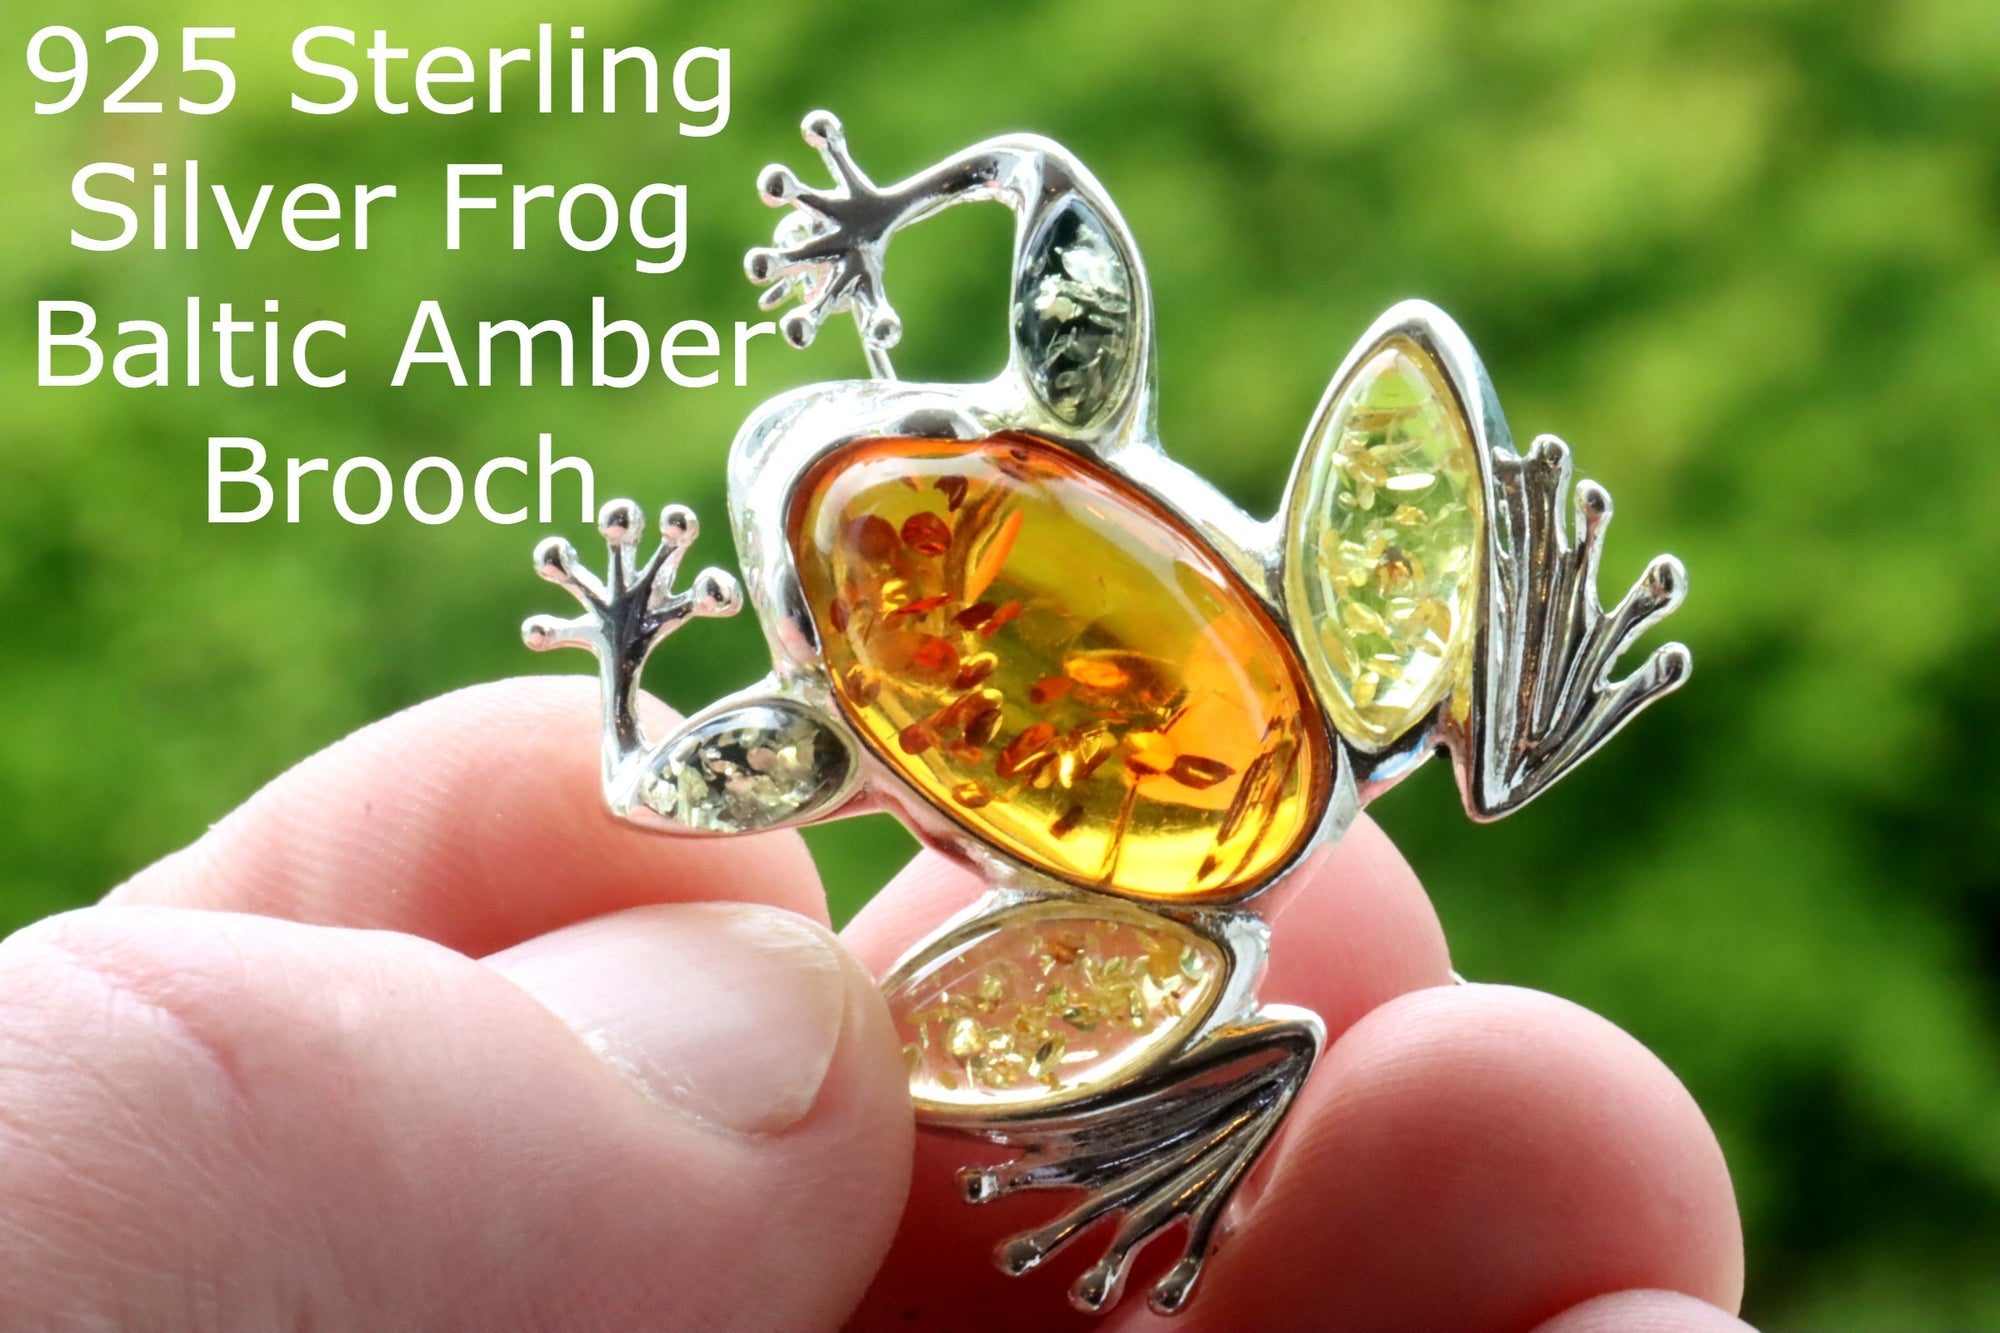 Frog Baltic Amber Brooch.